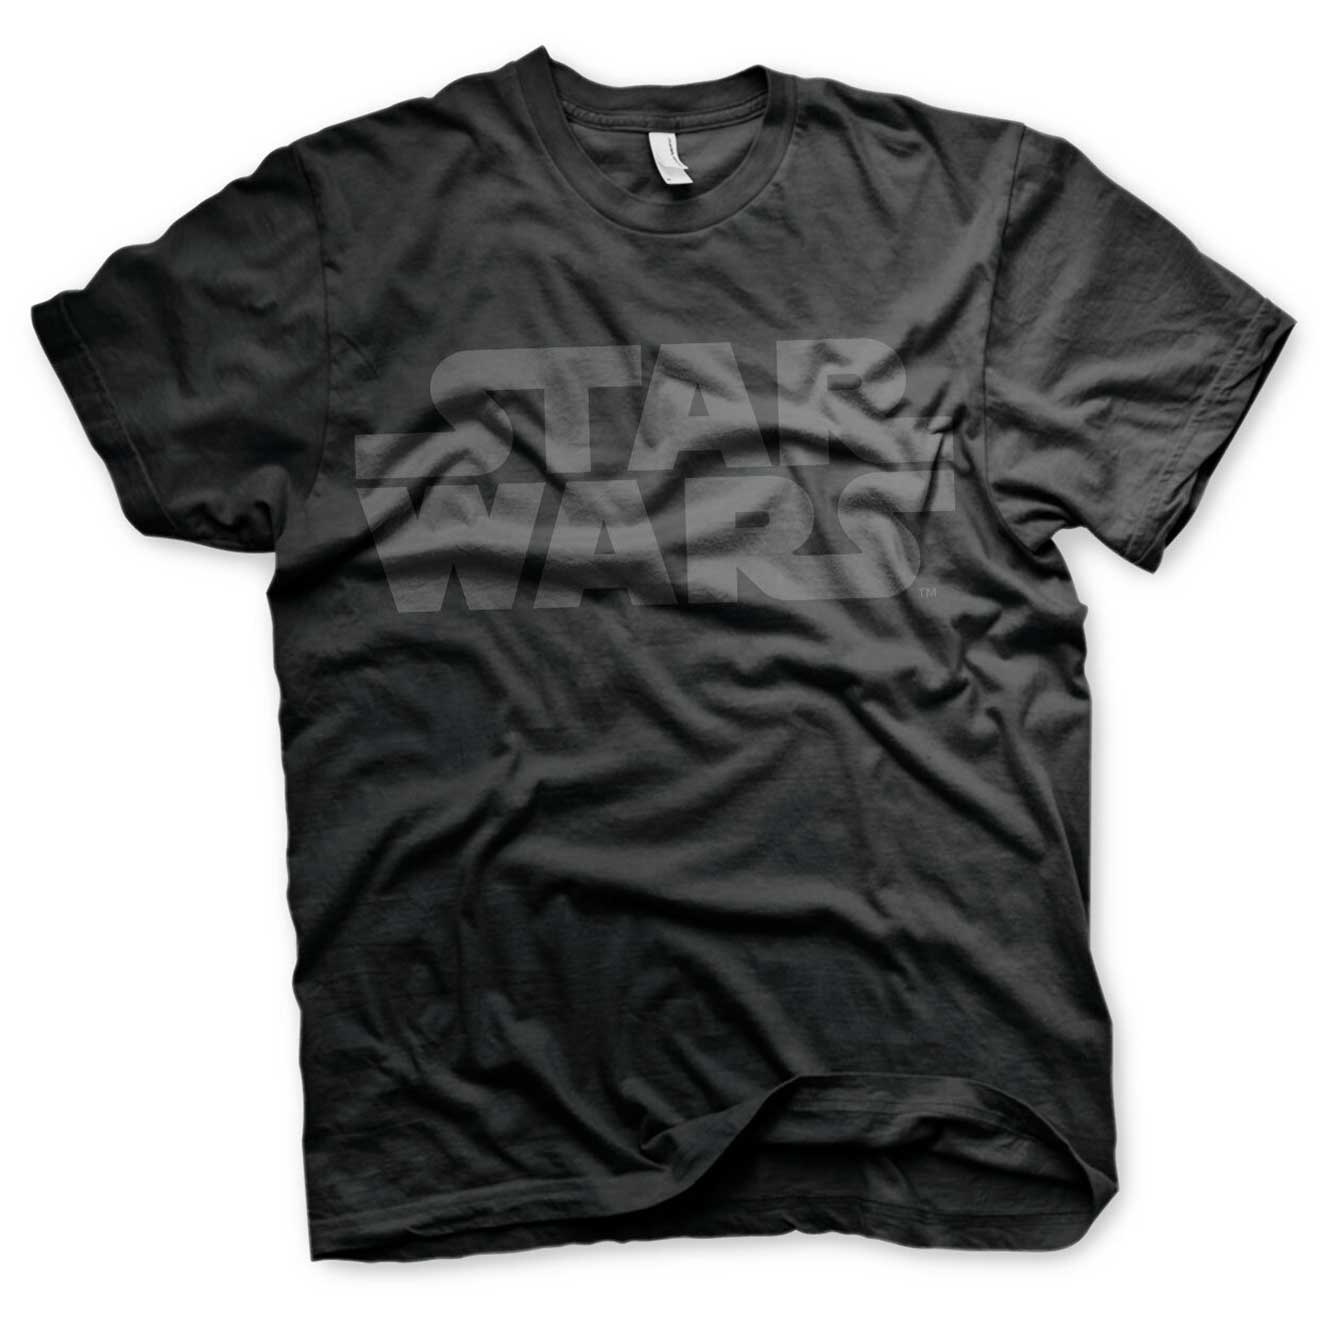 star-wars-black-logo-t-shirt